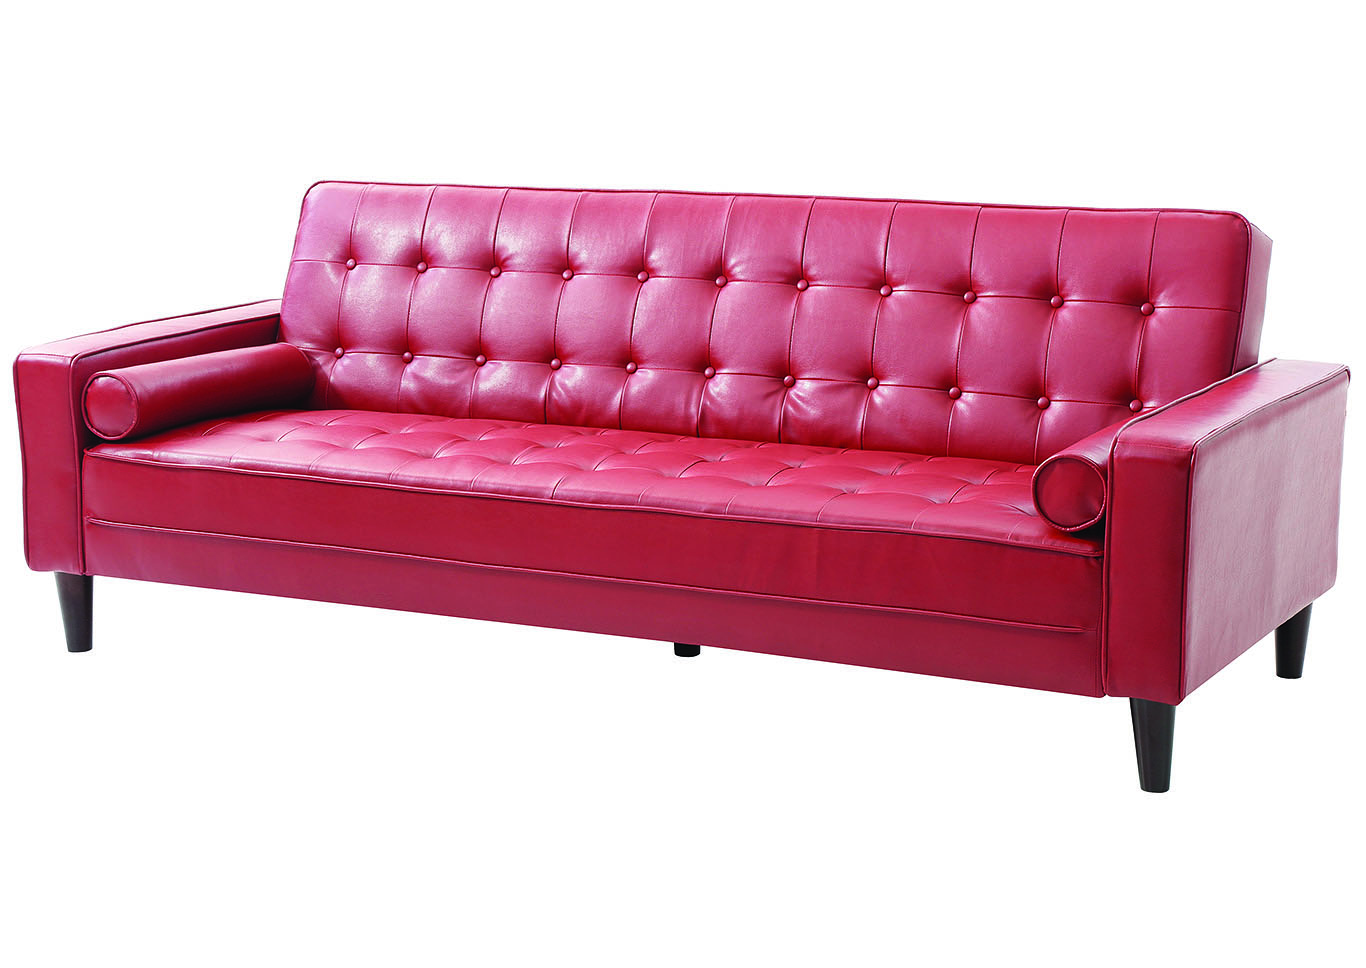 Red PU Sofa Bed,Glory Furniture